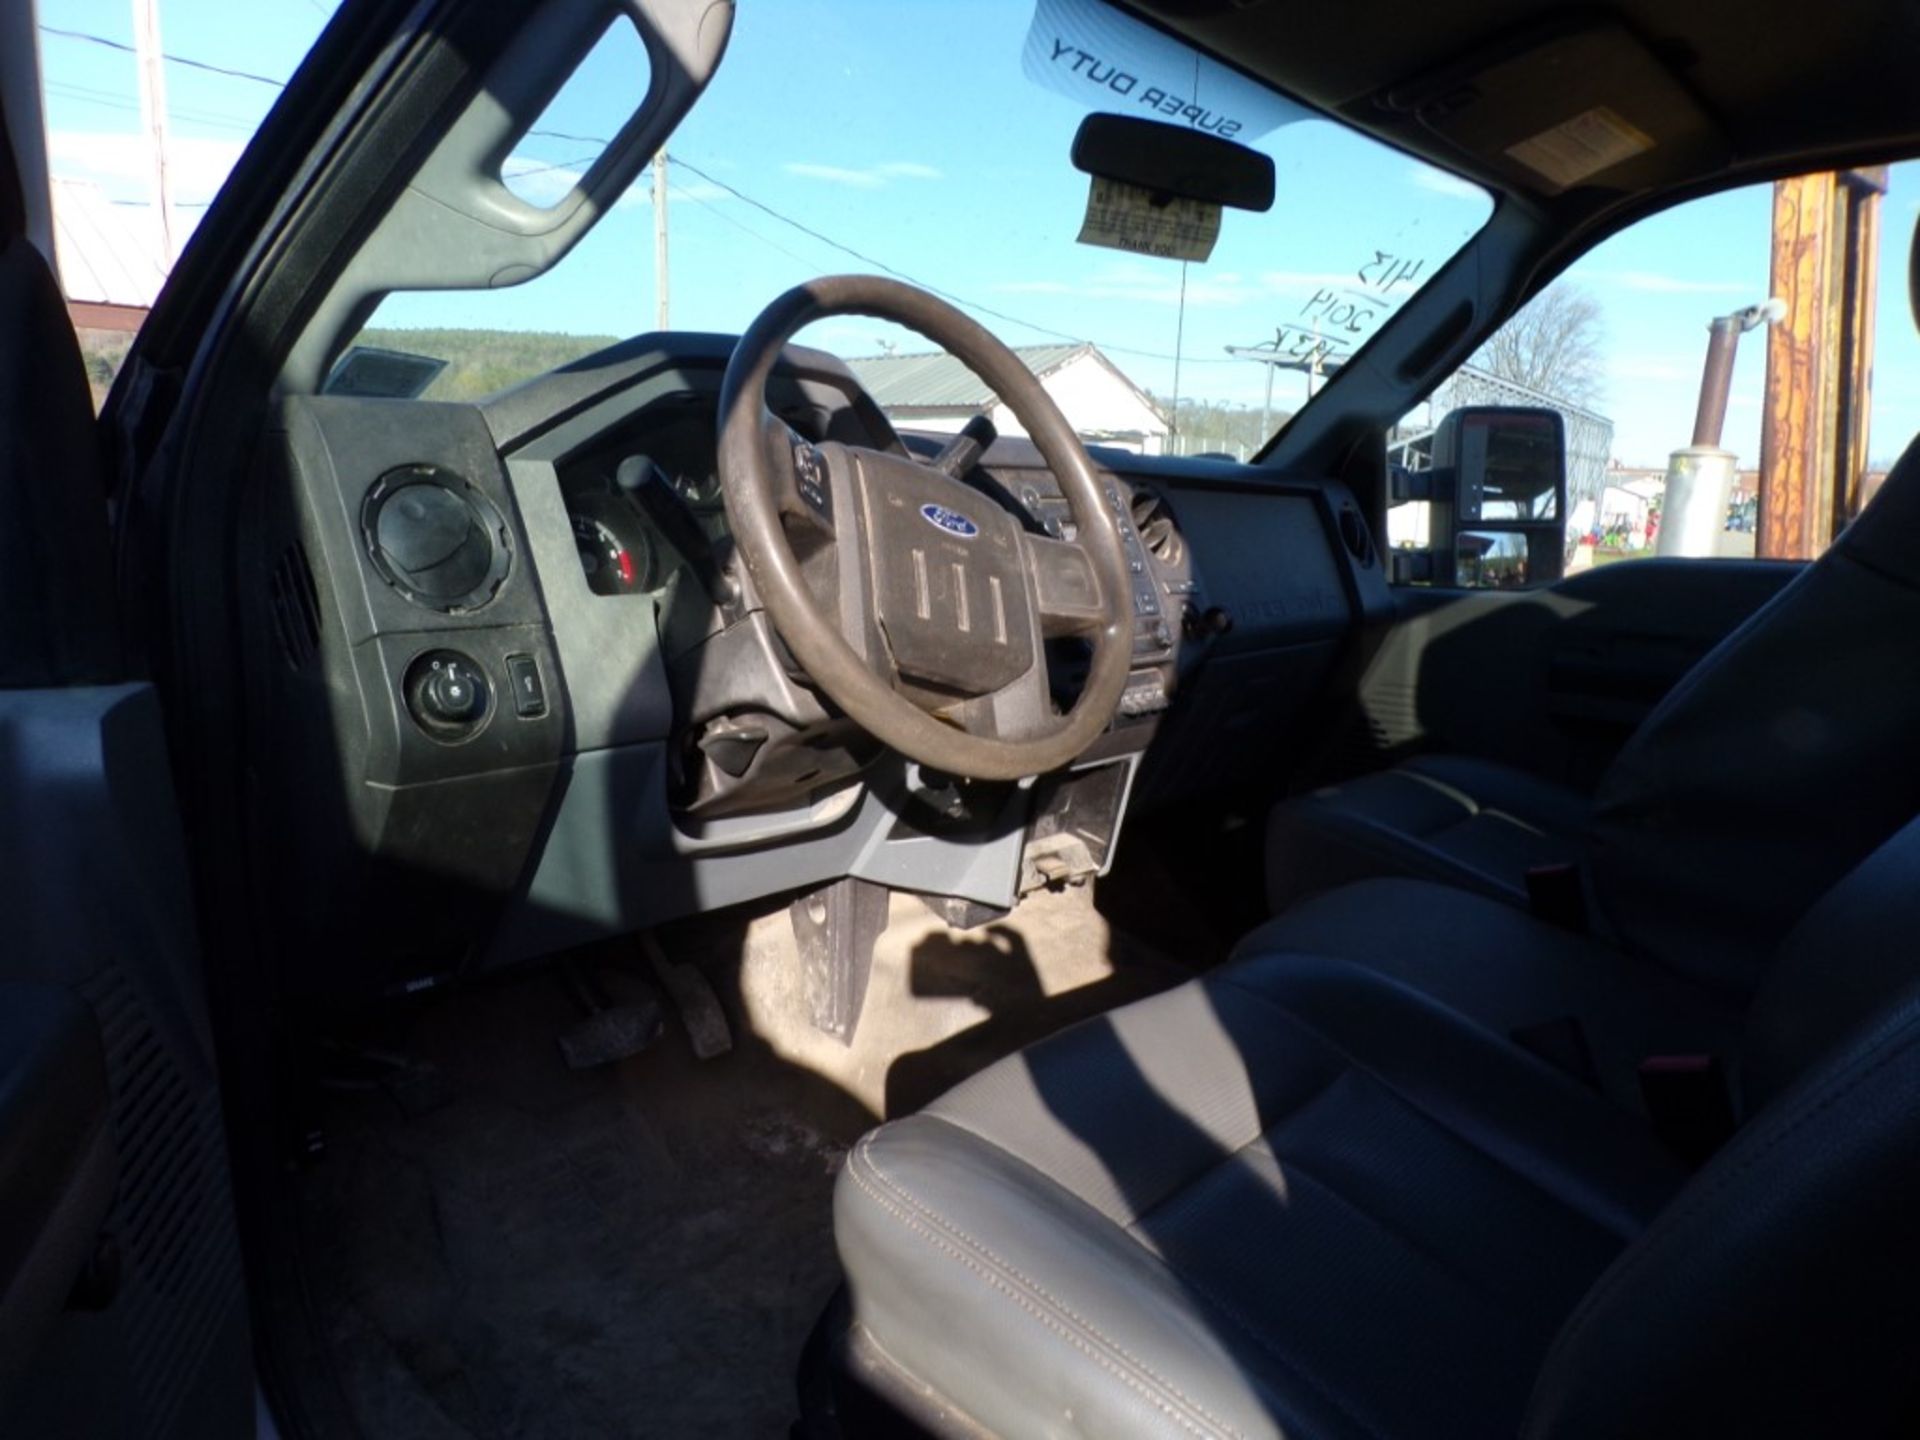 2014 Ford F-250 Reg. Cab, 8' Box, 4 WD, Auto,193,659 Miles,Vin # 1FTBF2B60EEA40402- HAVE TITLE ( - Image 5 of 5